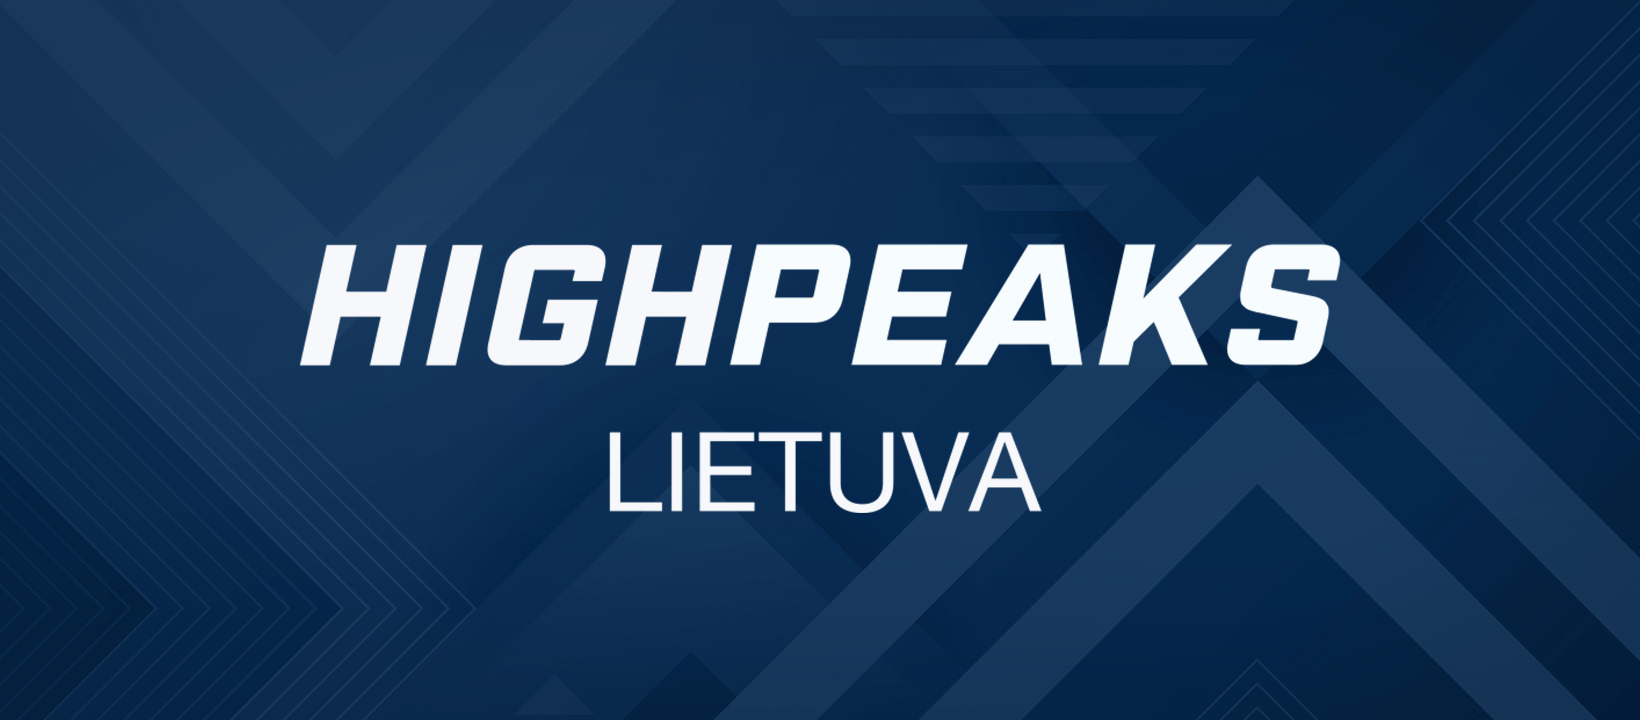 HighPeaks-Lietuva1.jpg